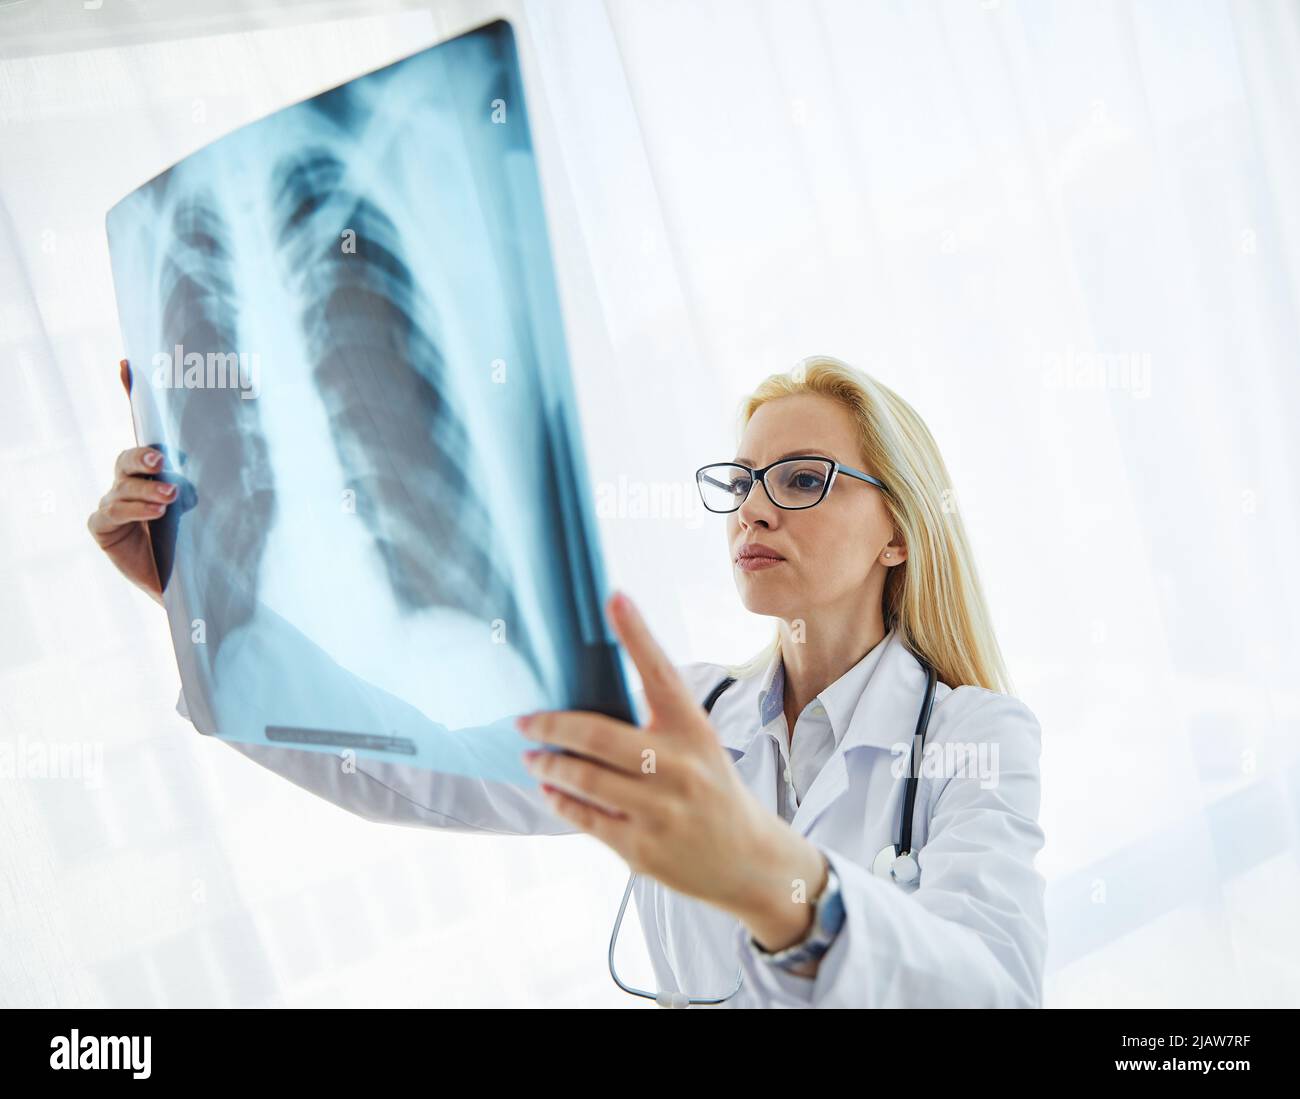 doctor hospita medica medicine health x-ray clinic professional healthcare radiology care diagnosis x ray Stock Photo